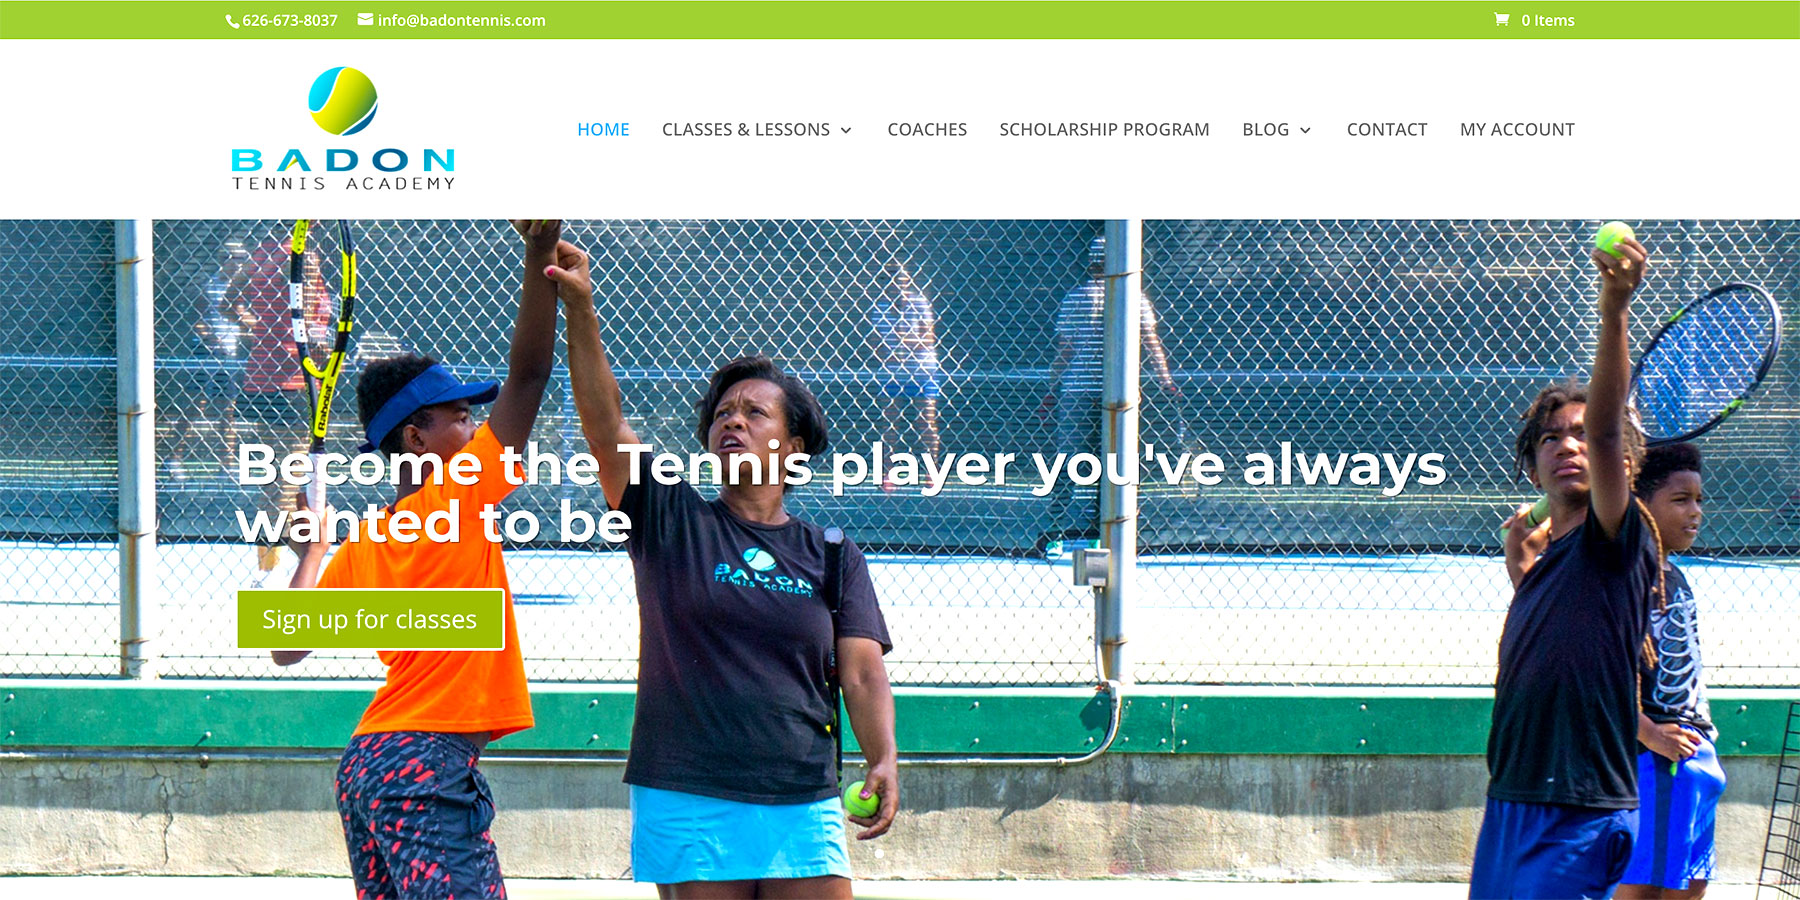 Badon Tennis Academy home page header image 